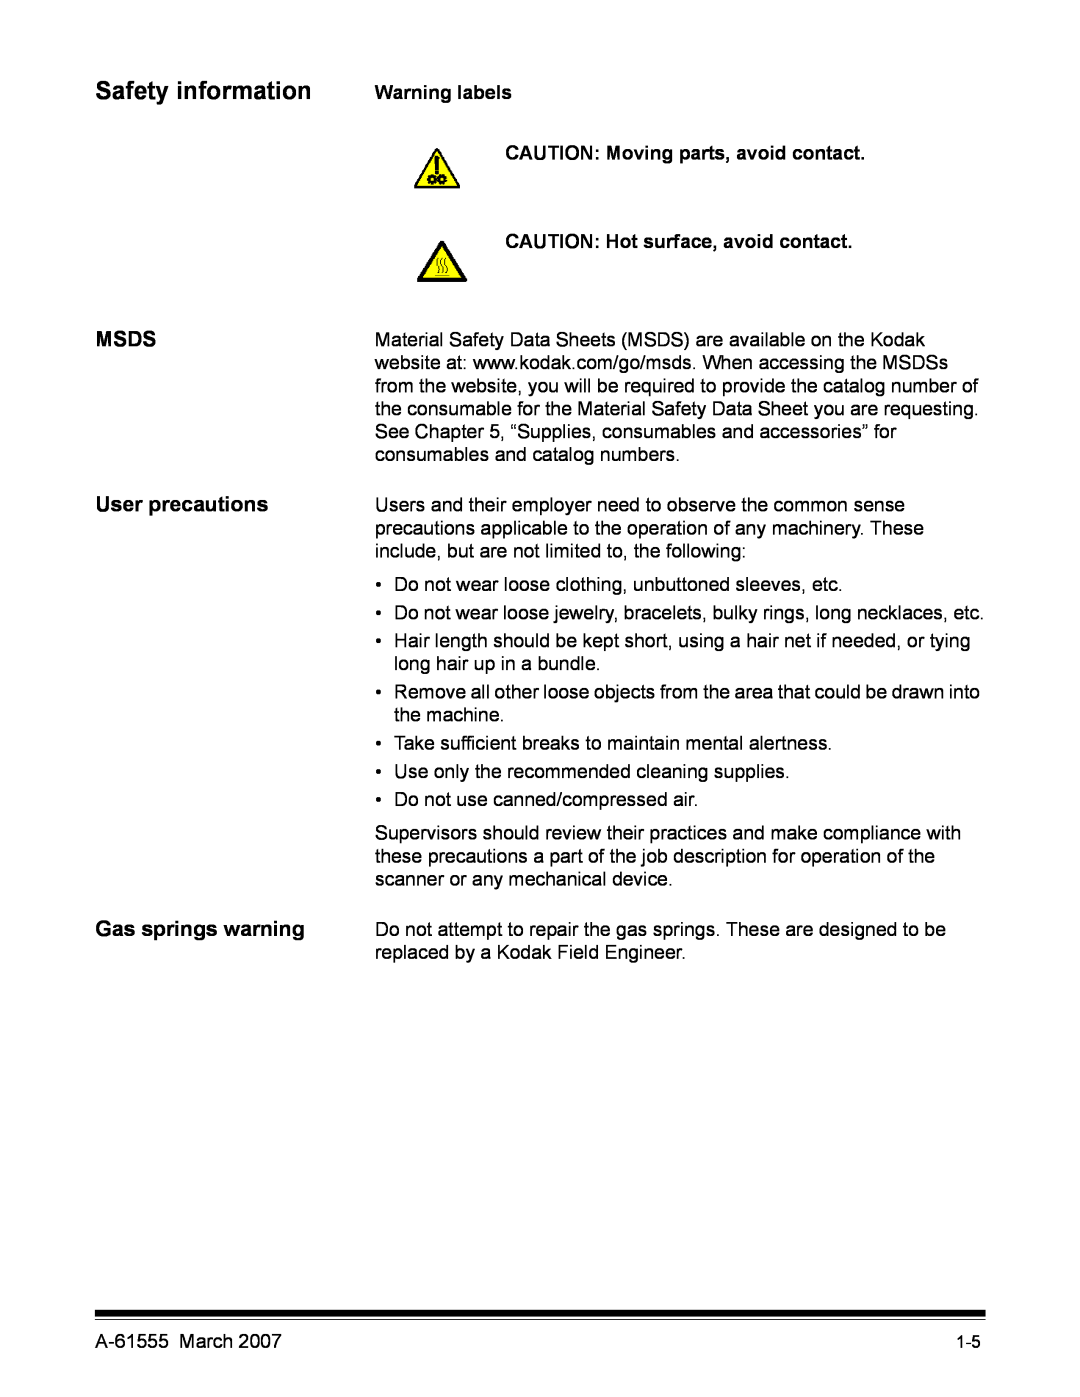 Kodak i1800 Series manual Safety information, Msds, User precautions, Gas springs warning, Warning labels 